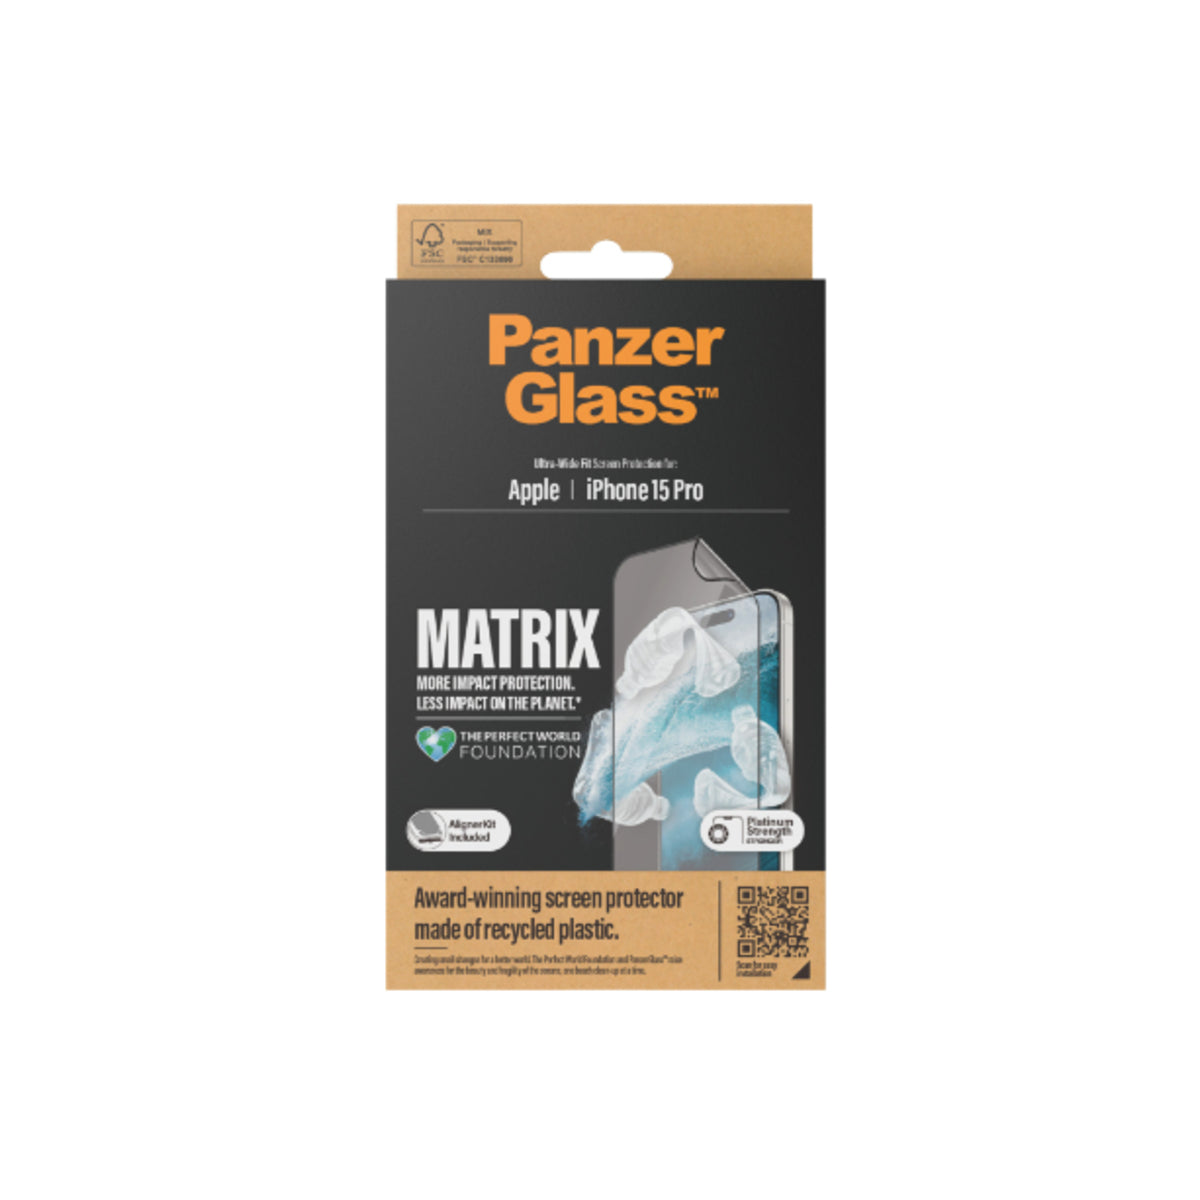 PanzerGlass Matrix Hybrid Glass Screen Protector for iPhone 15 Pro